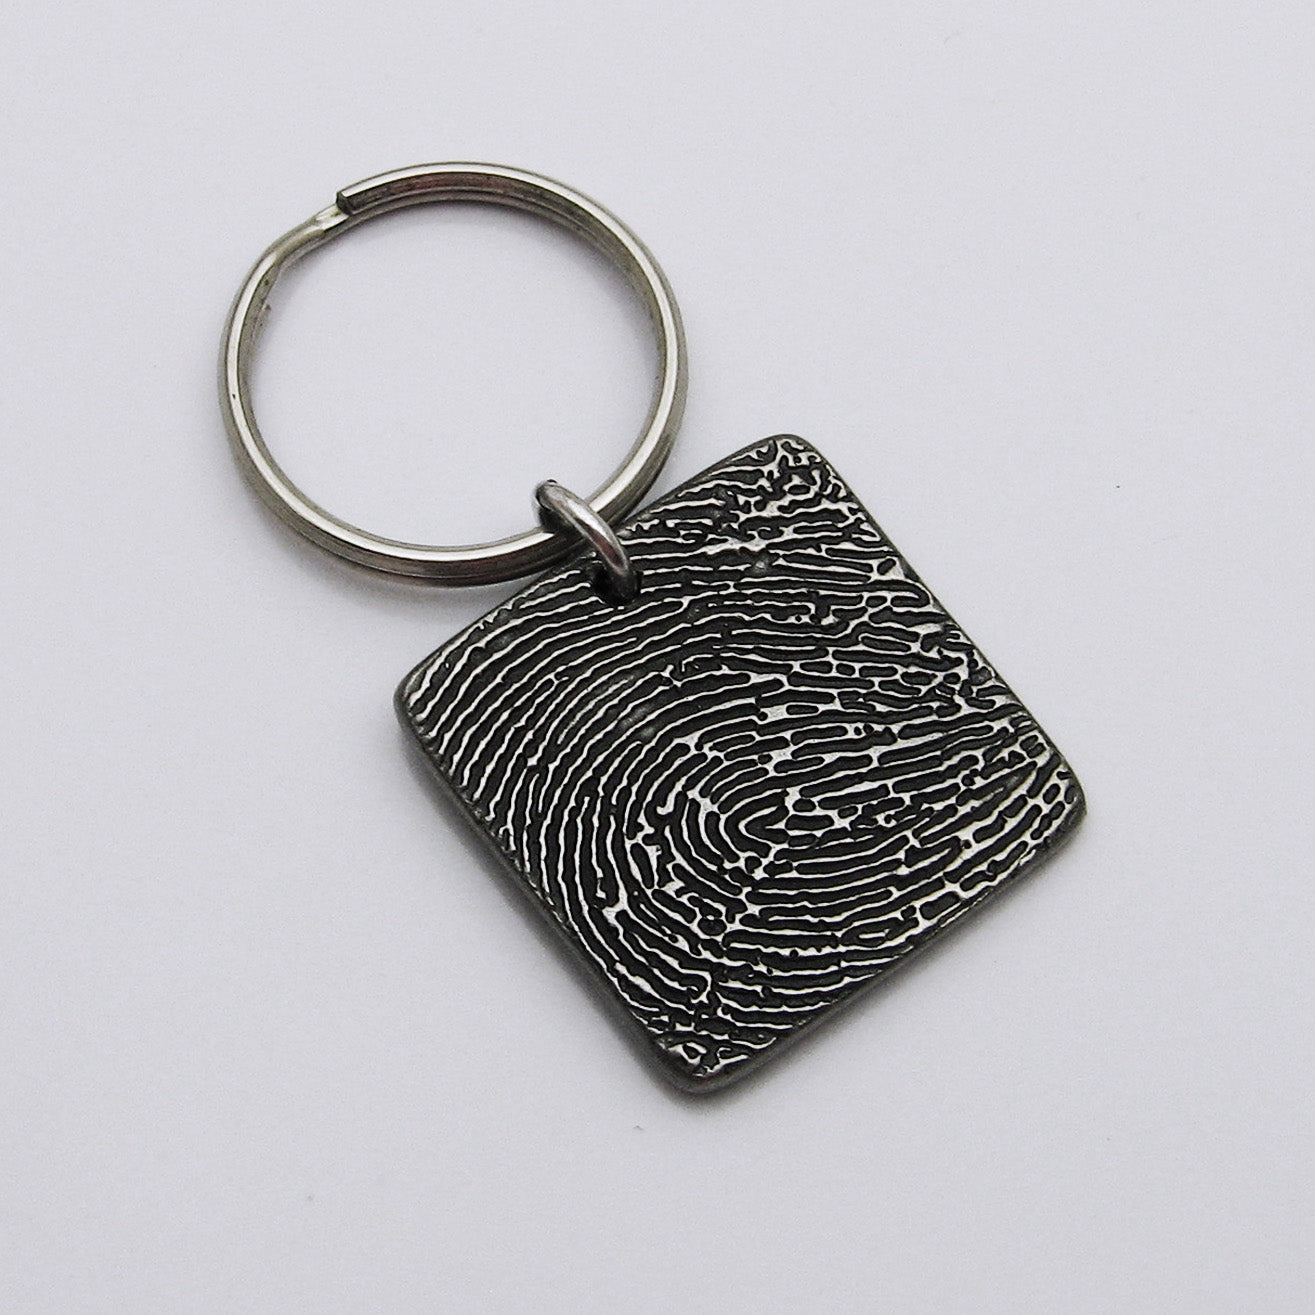 Rustic Metal Square Fingerprint Keychain